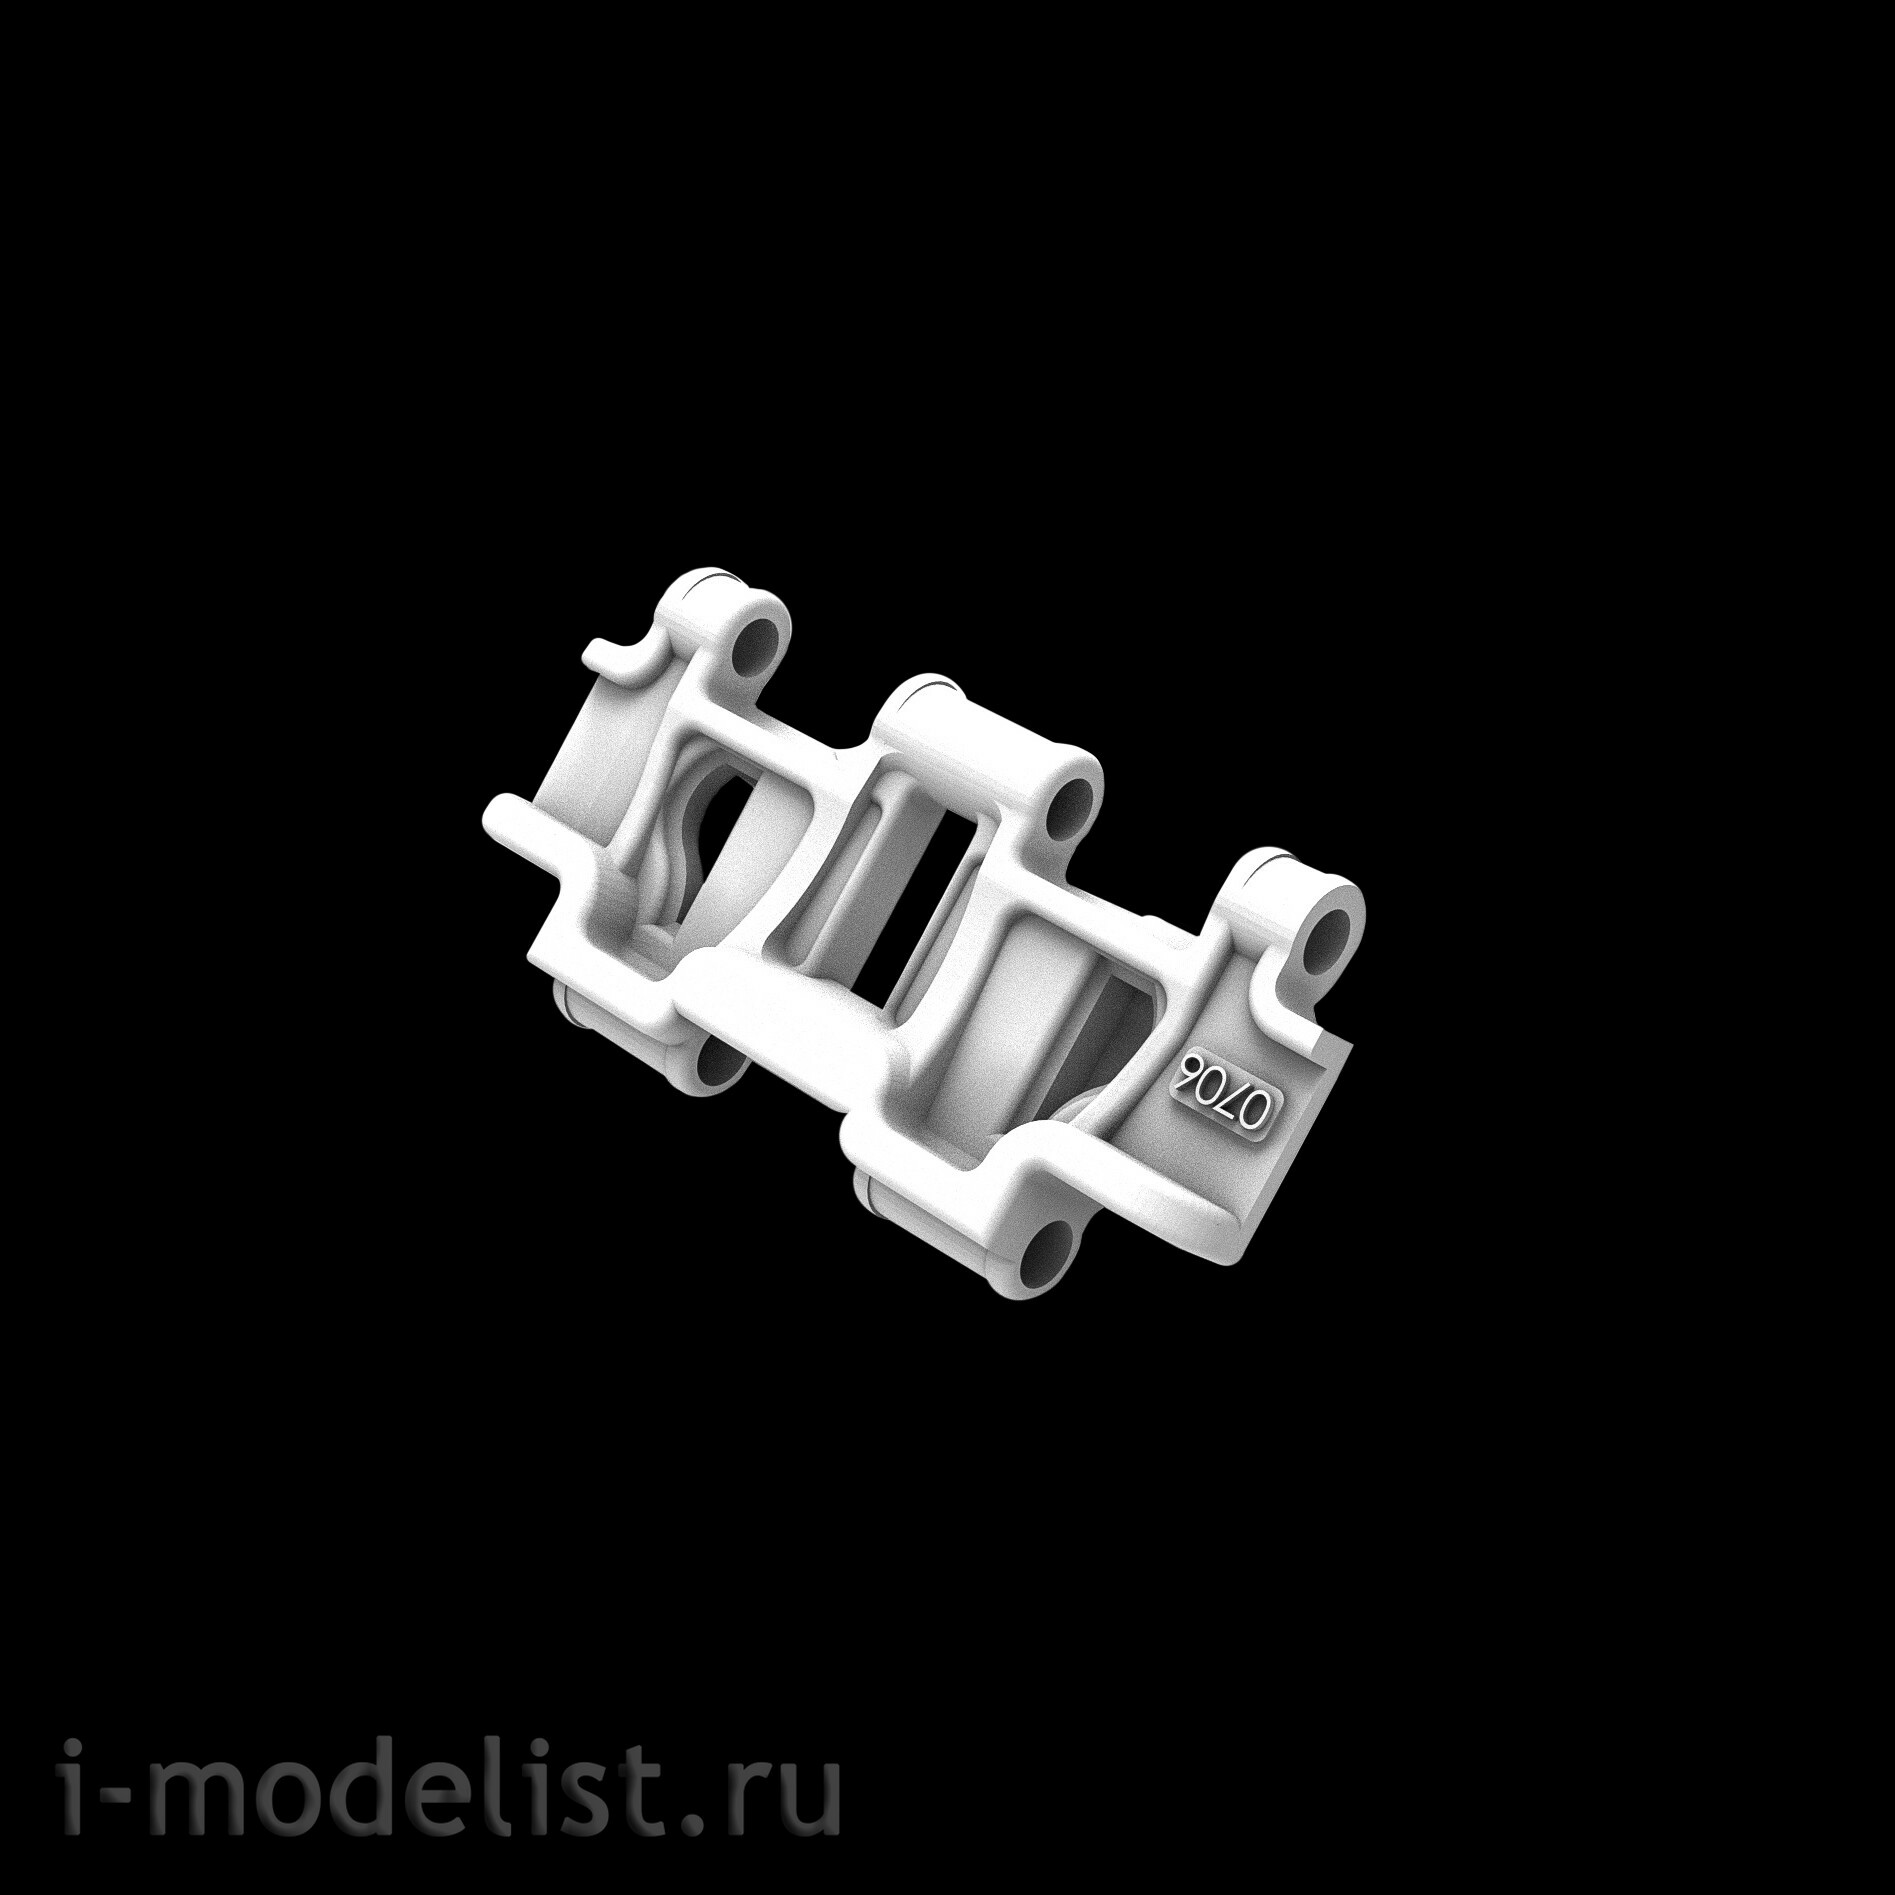 IM35100 Imodelist 1/35 Typesetting tracks for T-70B (Zvezda)